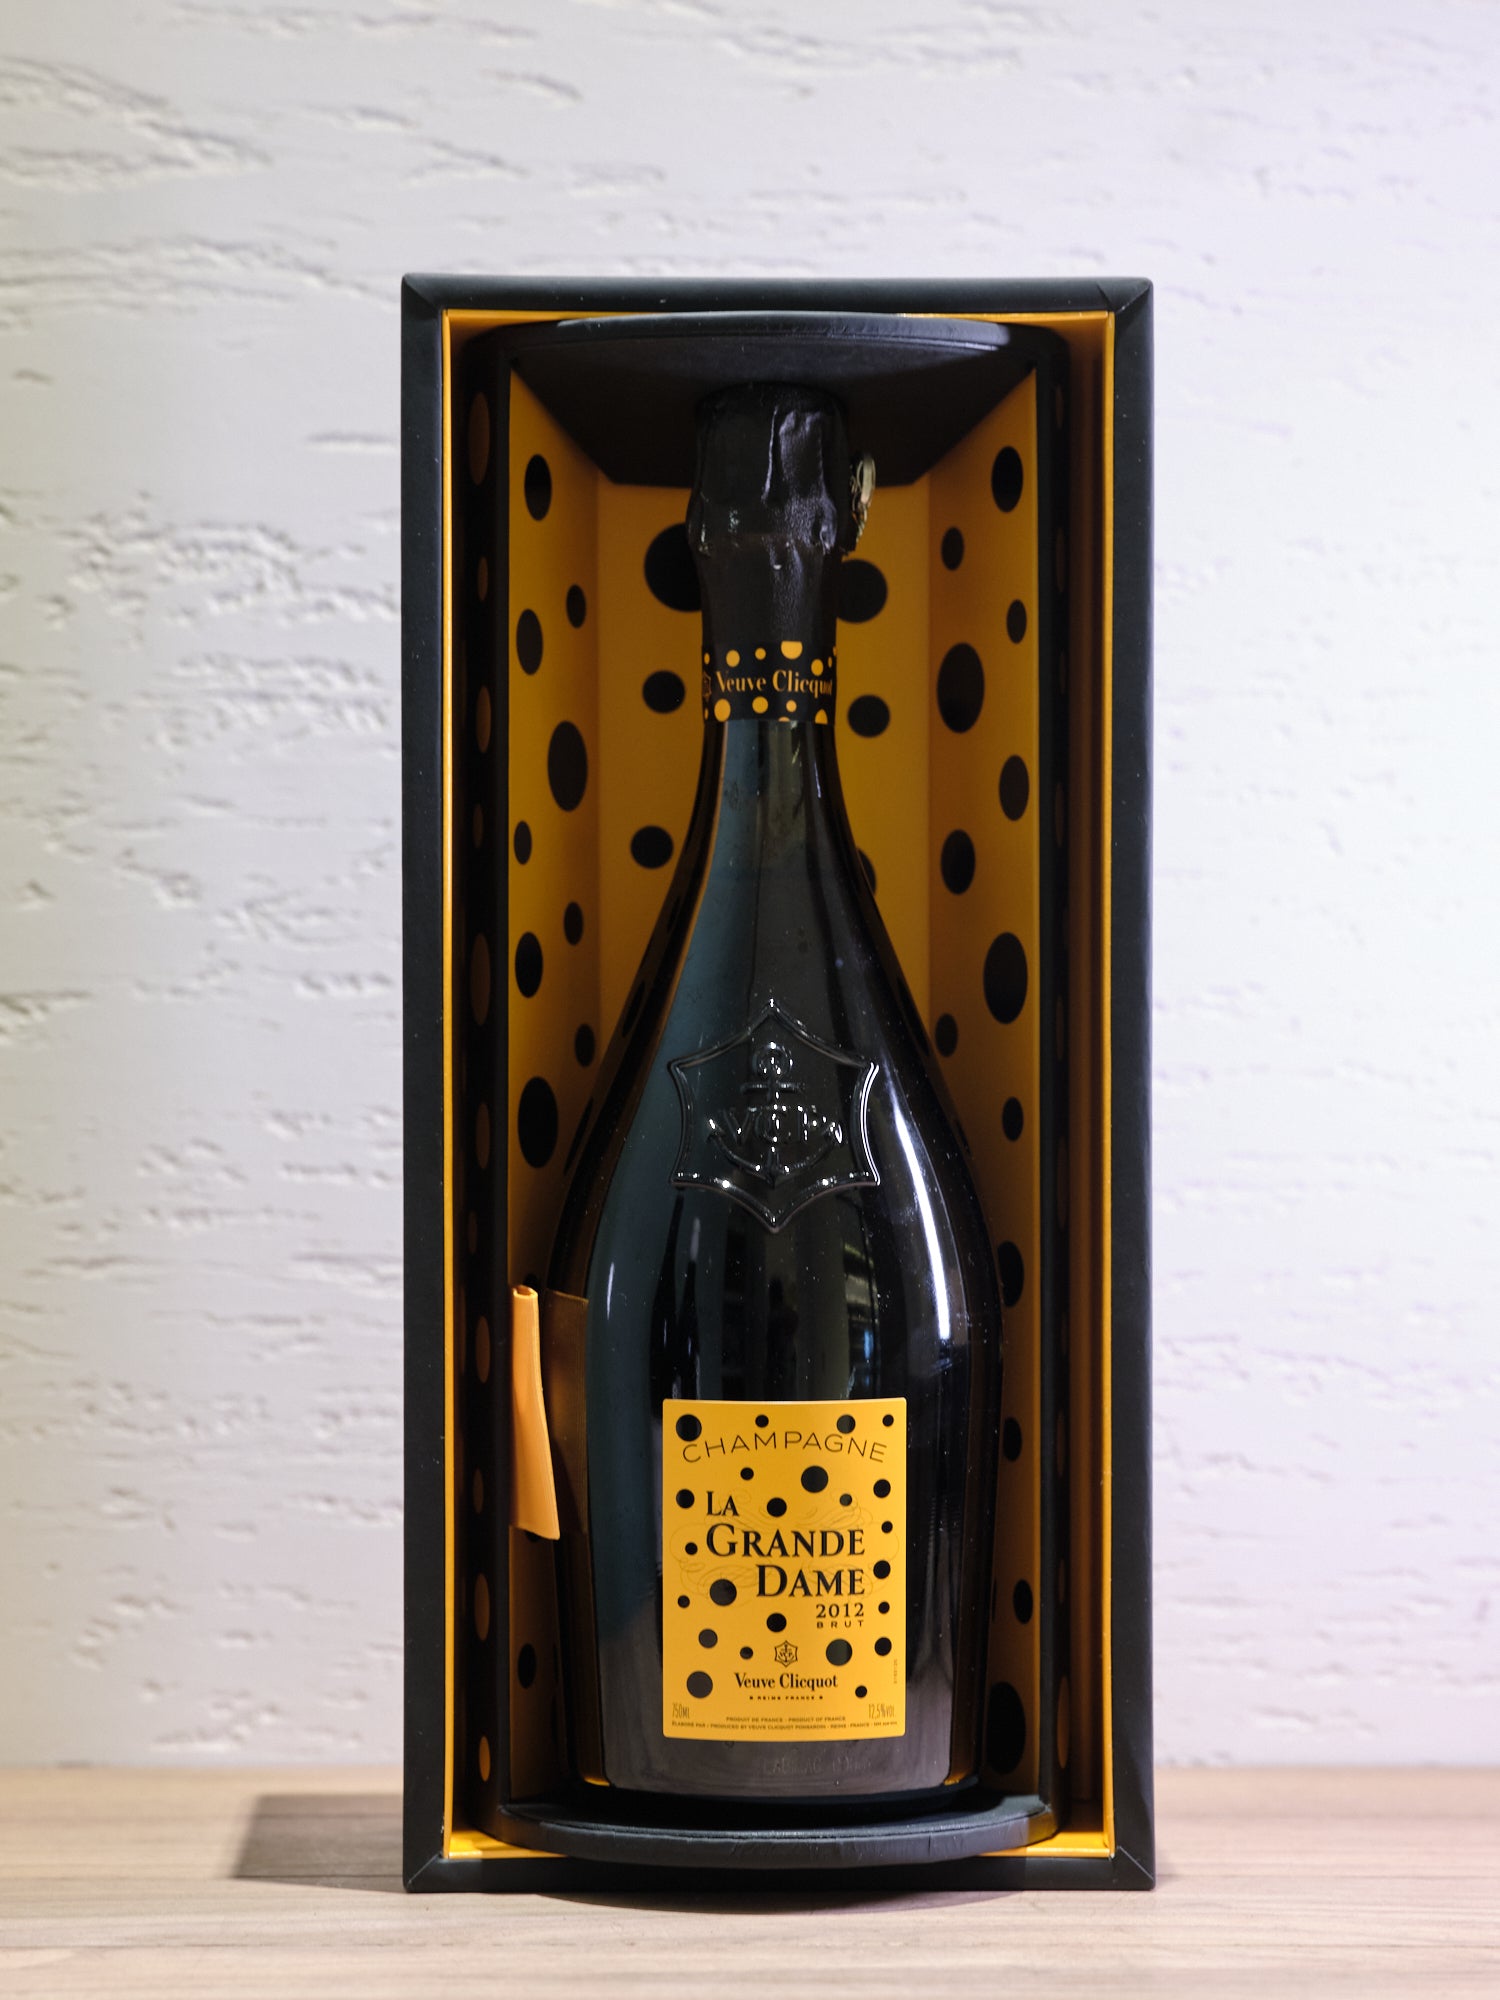 2012 Veuve Clicquot Champagne Brut La Grande Dame Yayoi Kusama